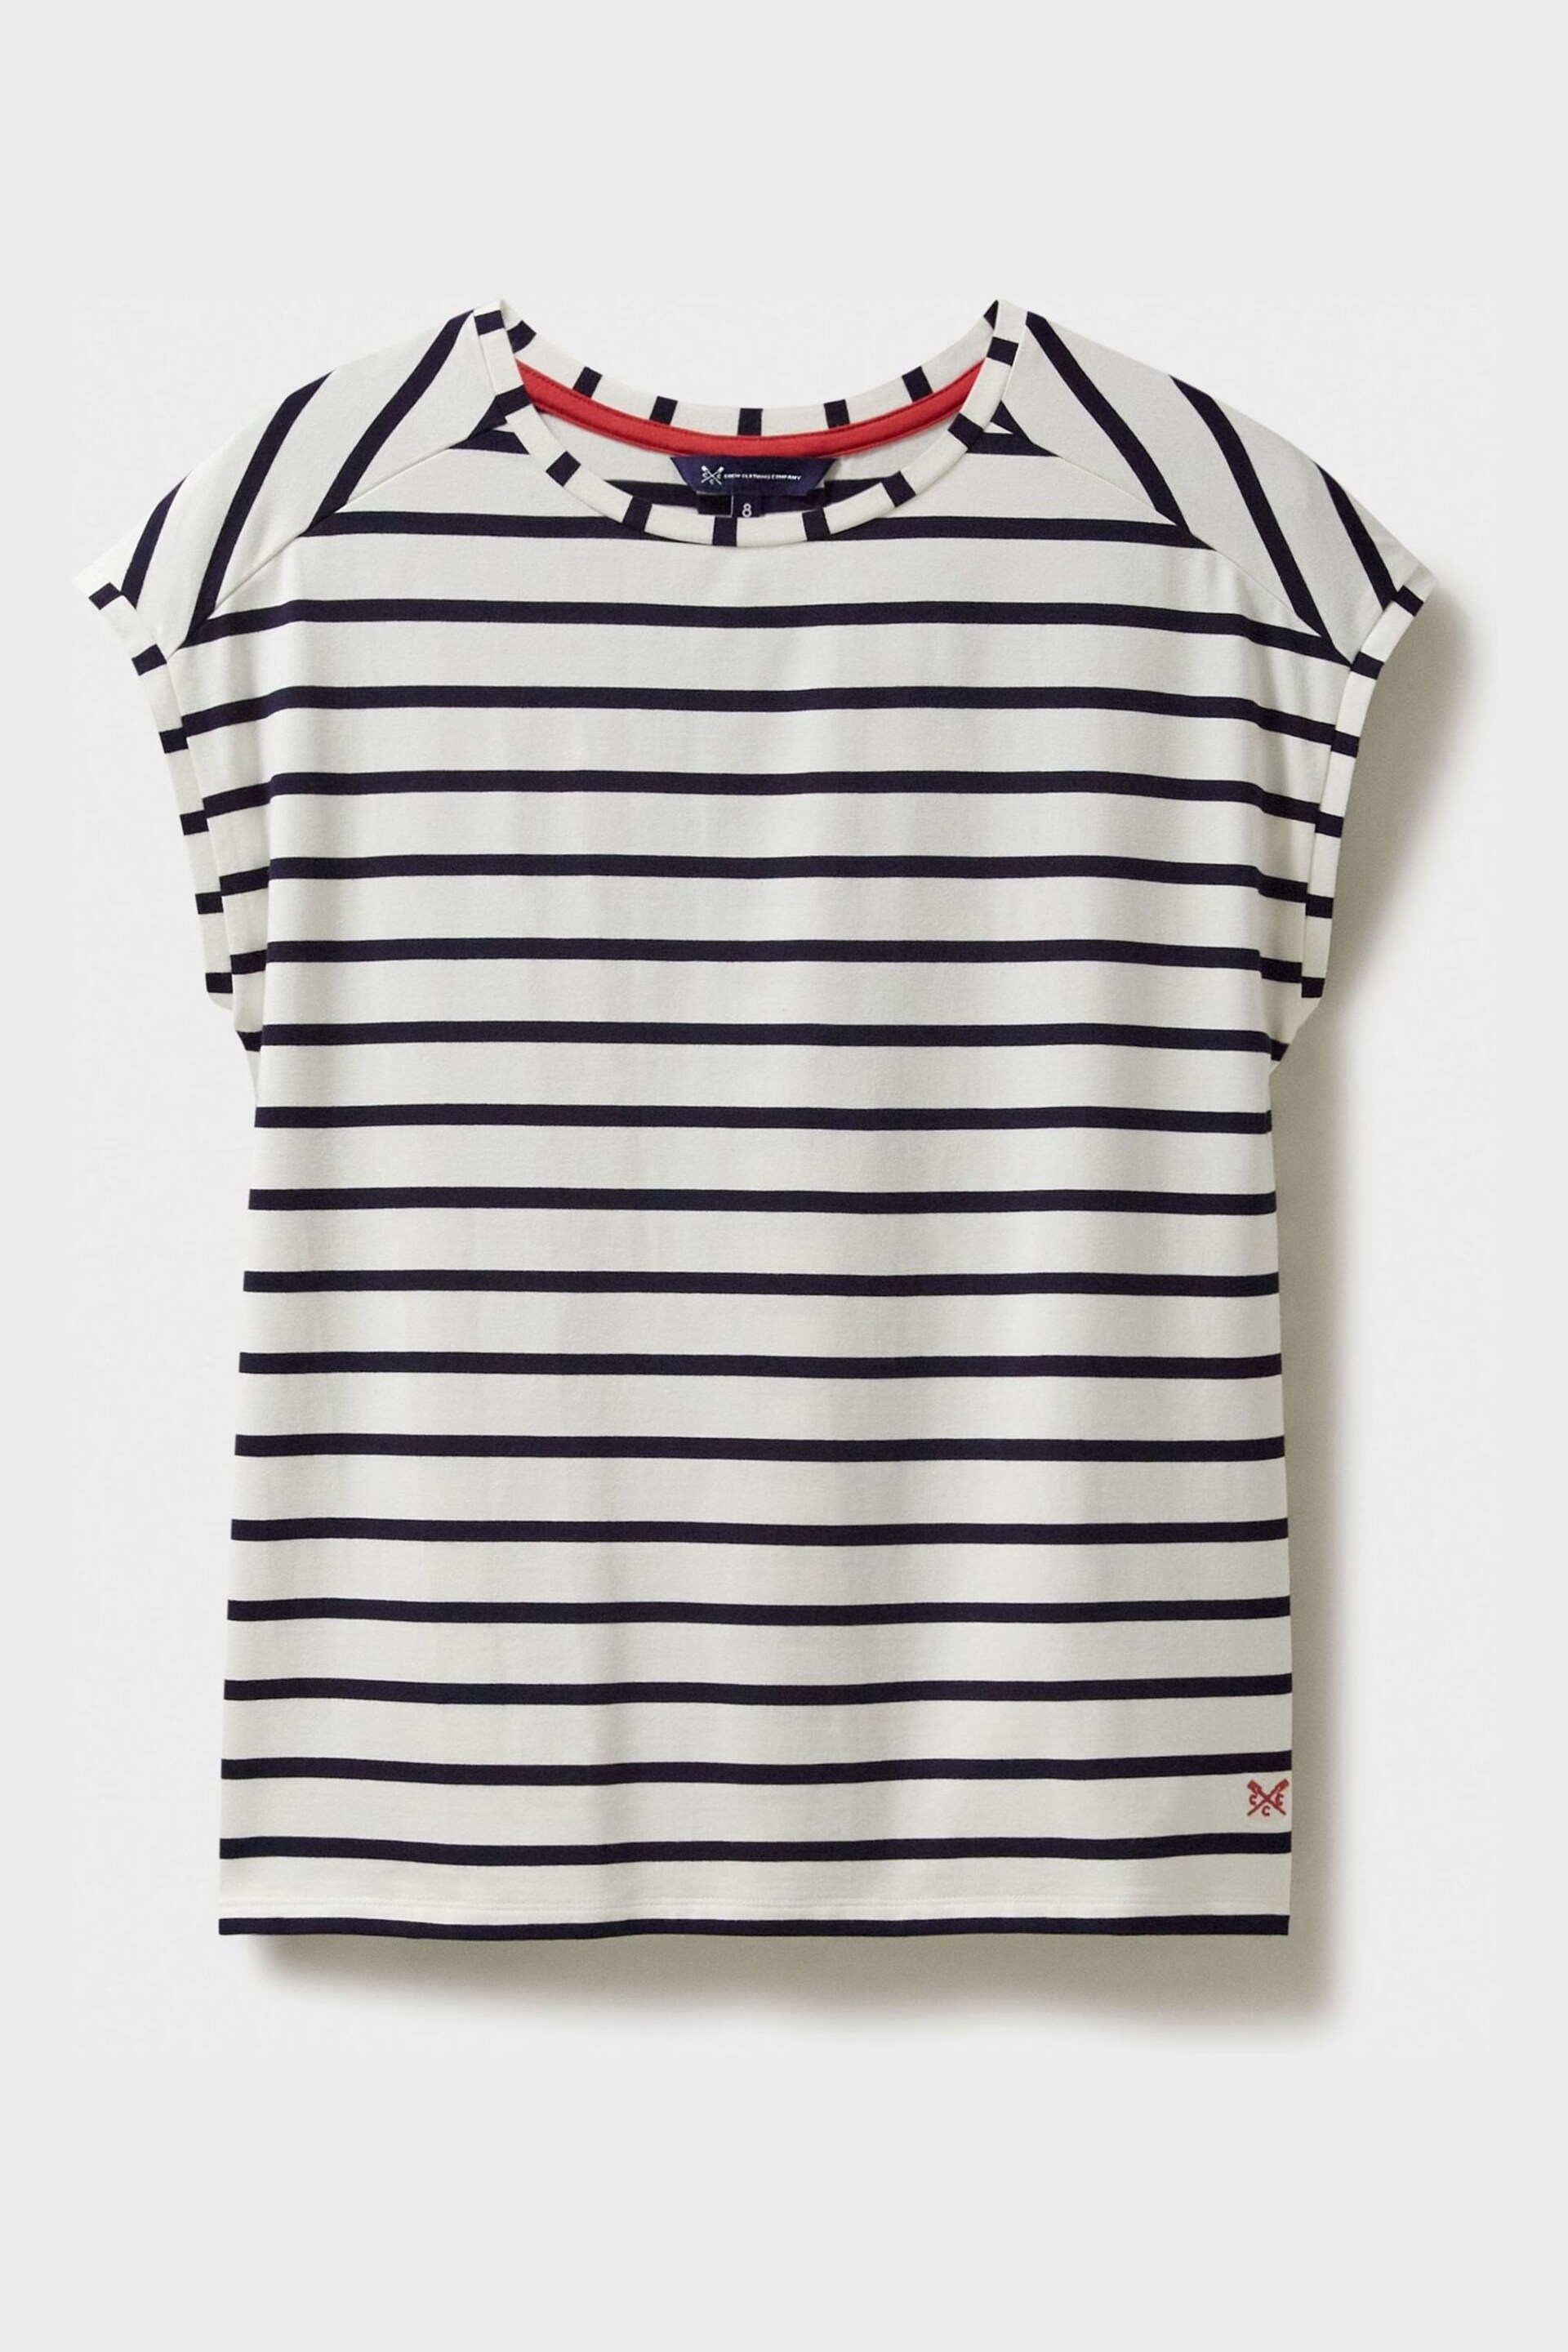 Crew Clothing Ruby Breton Stripe Jersey T-Shirt - Image 4 of 4